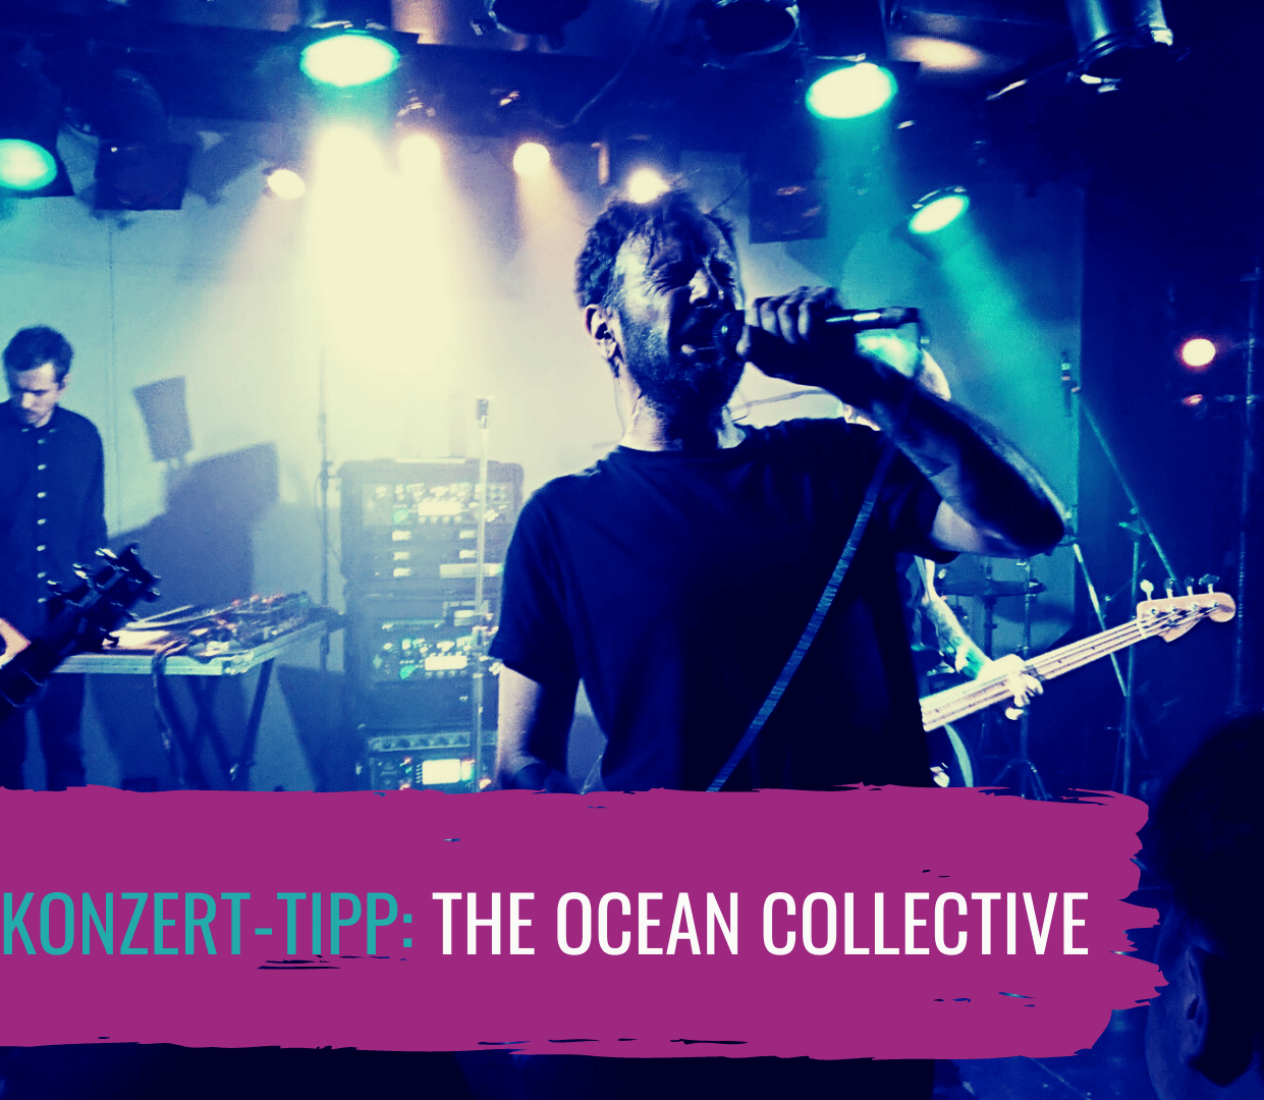 The Ocean Collective Live-Stream @ Pier2 Bremen